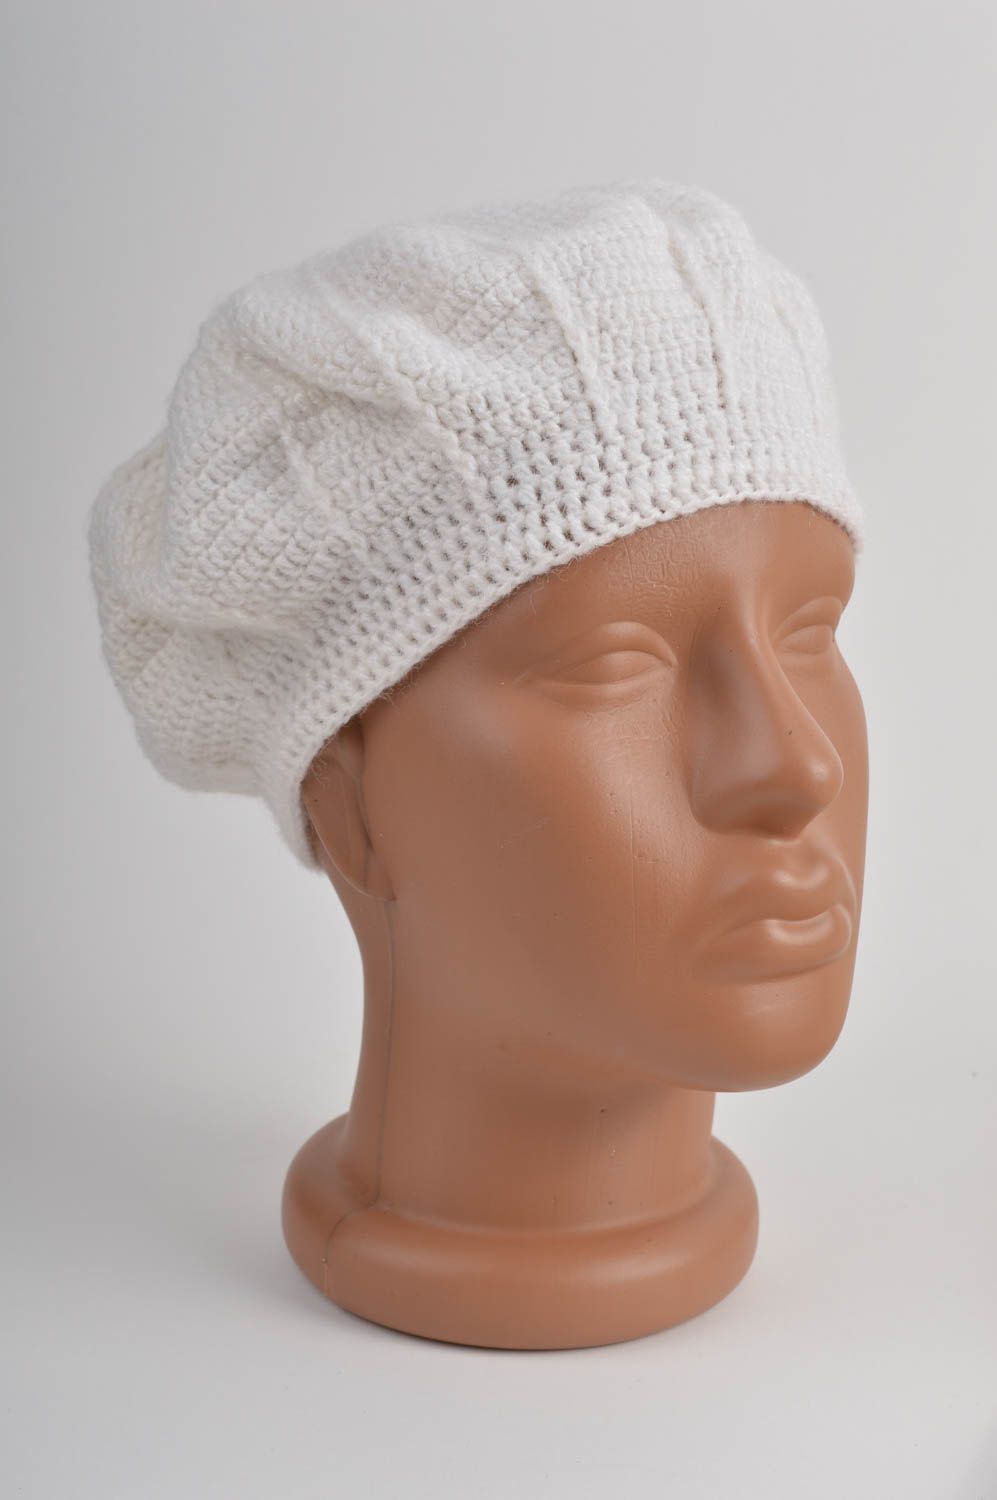 Crochet beret handmade accessories for girls toddler hats cute baby hats photo 2